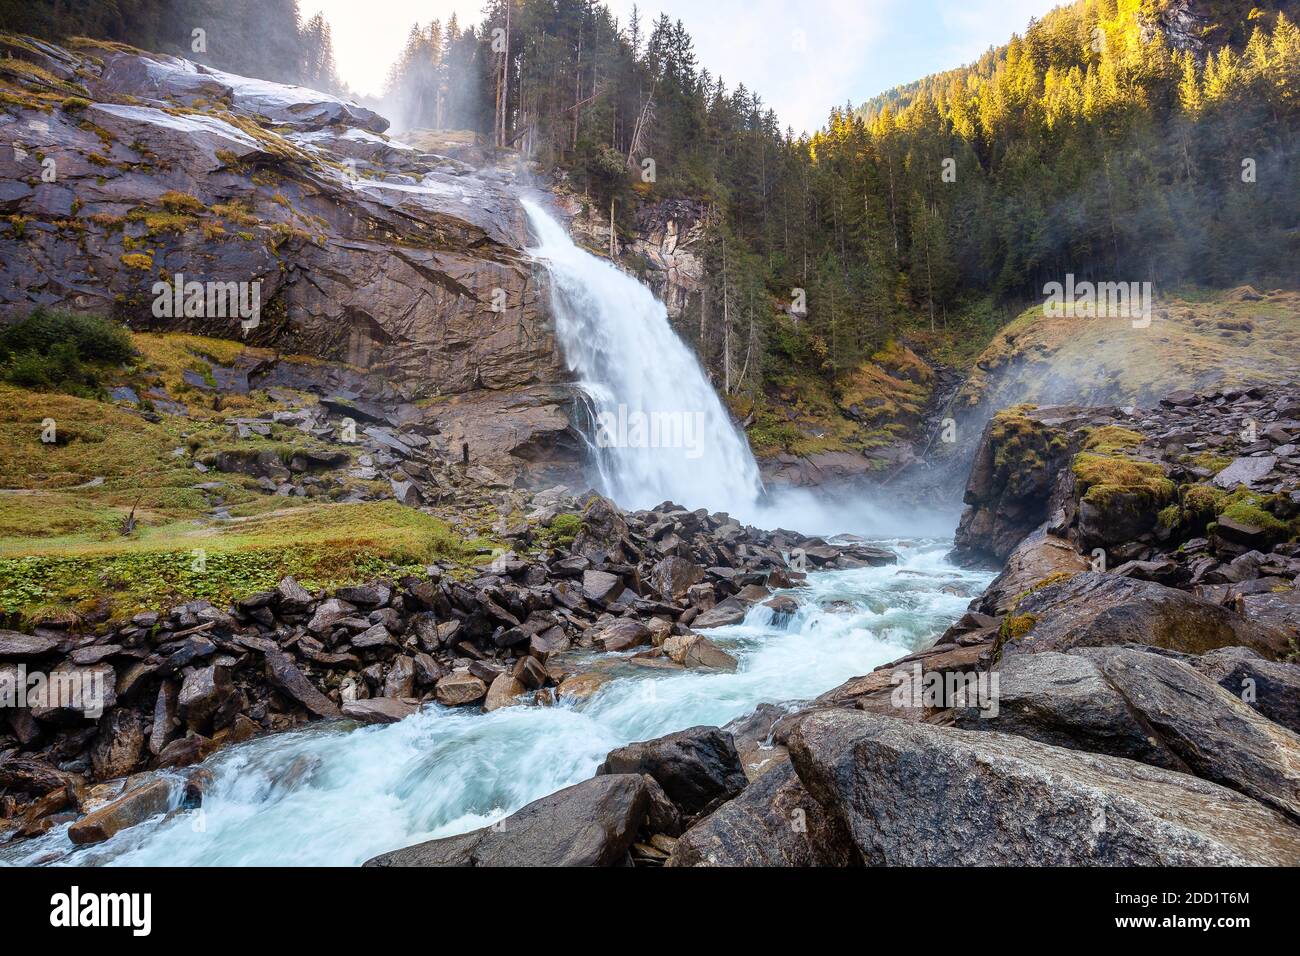 Las cascadas de Krimmler en Krimml, Austria, son las más altas de Europa  Fotografía de stock - Alamy